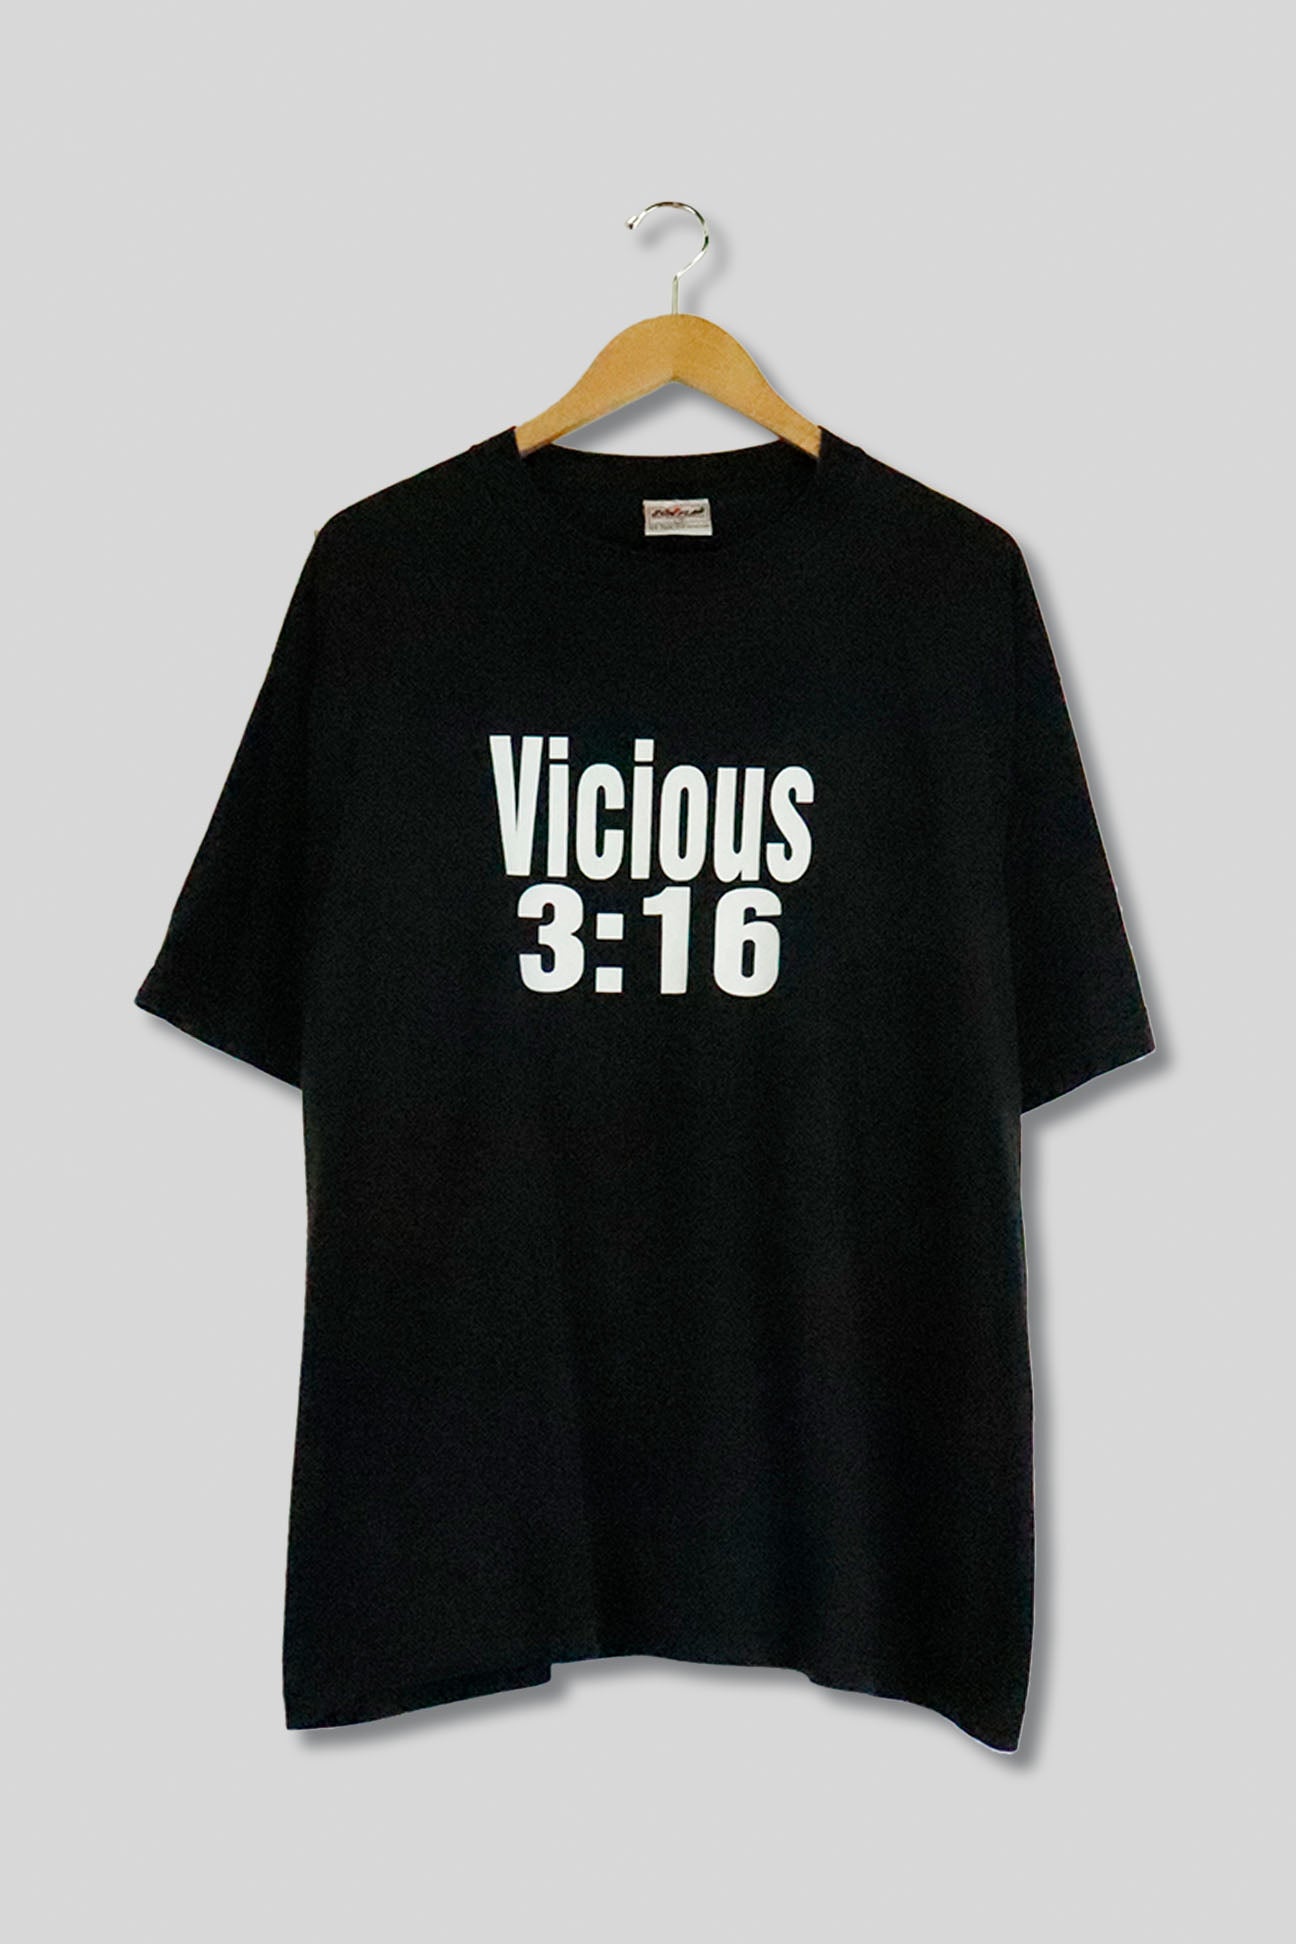 VClassic White – Vacious